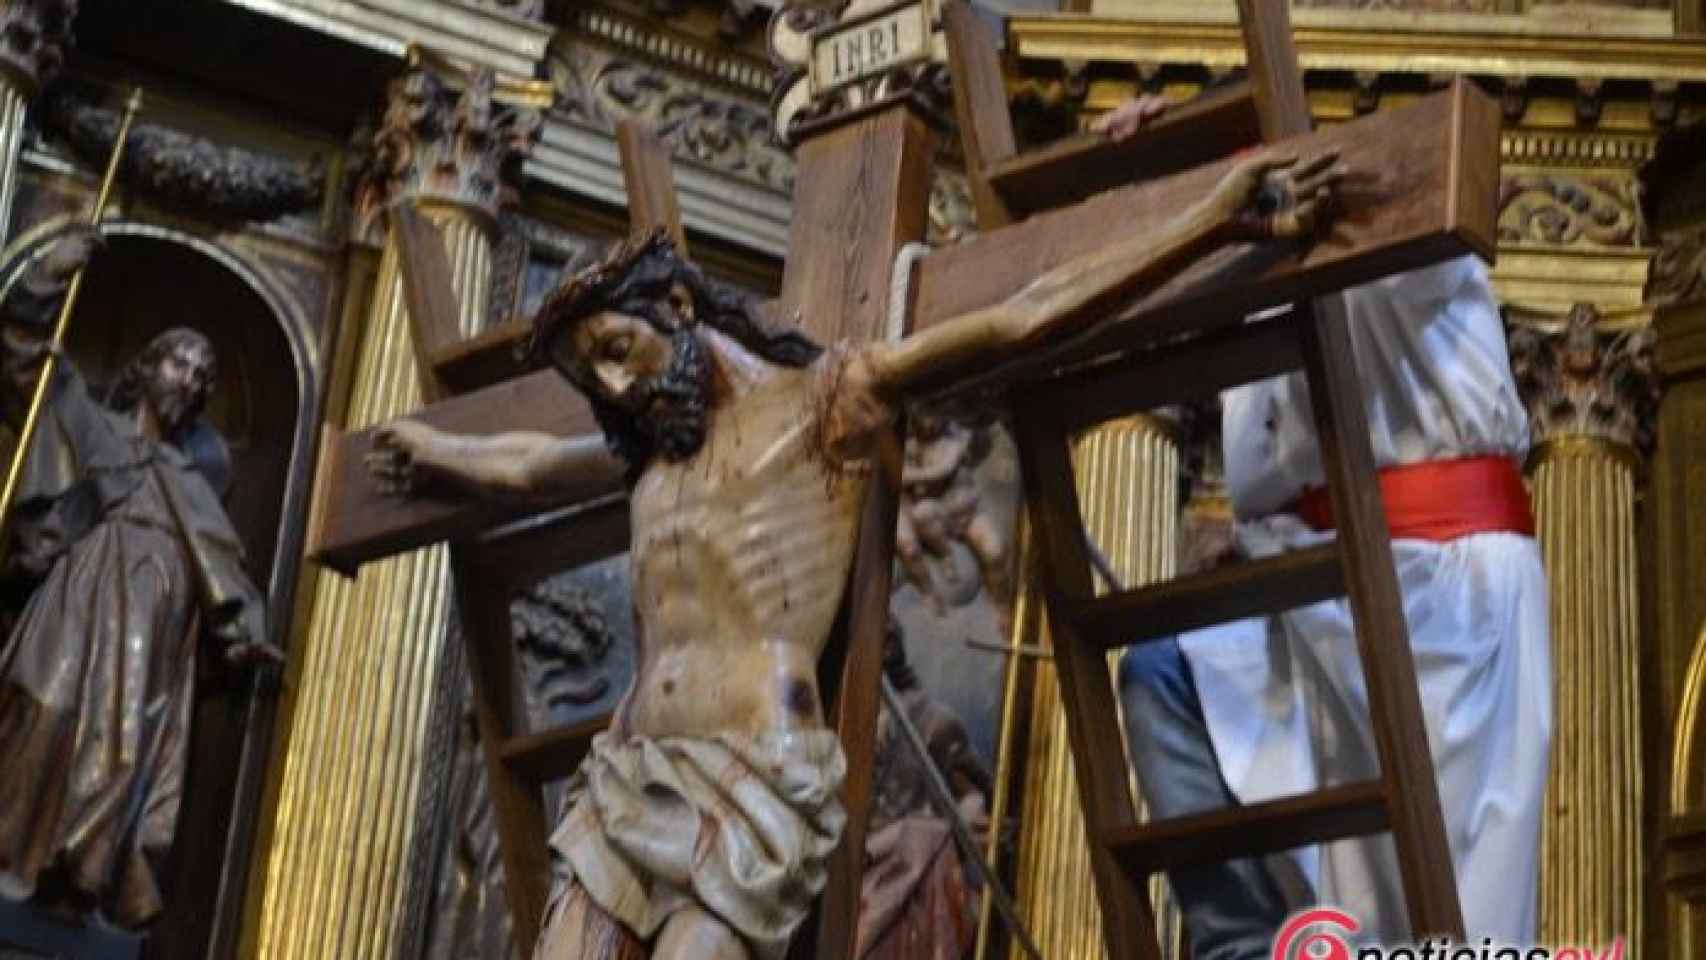 lavatorio crucifixion nava rey valladolid semana santa 14